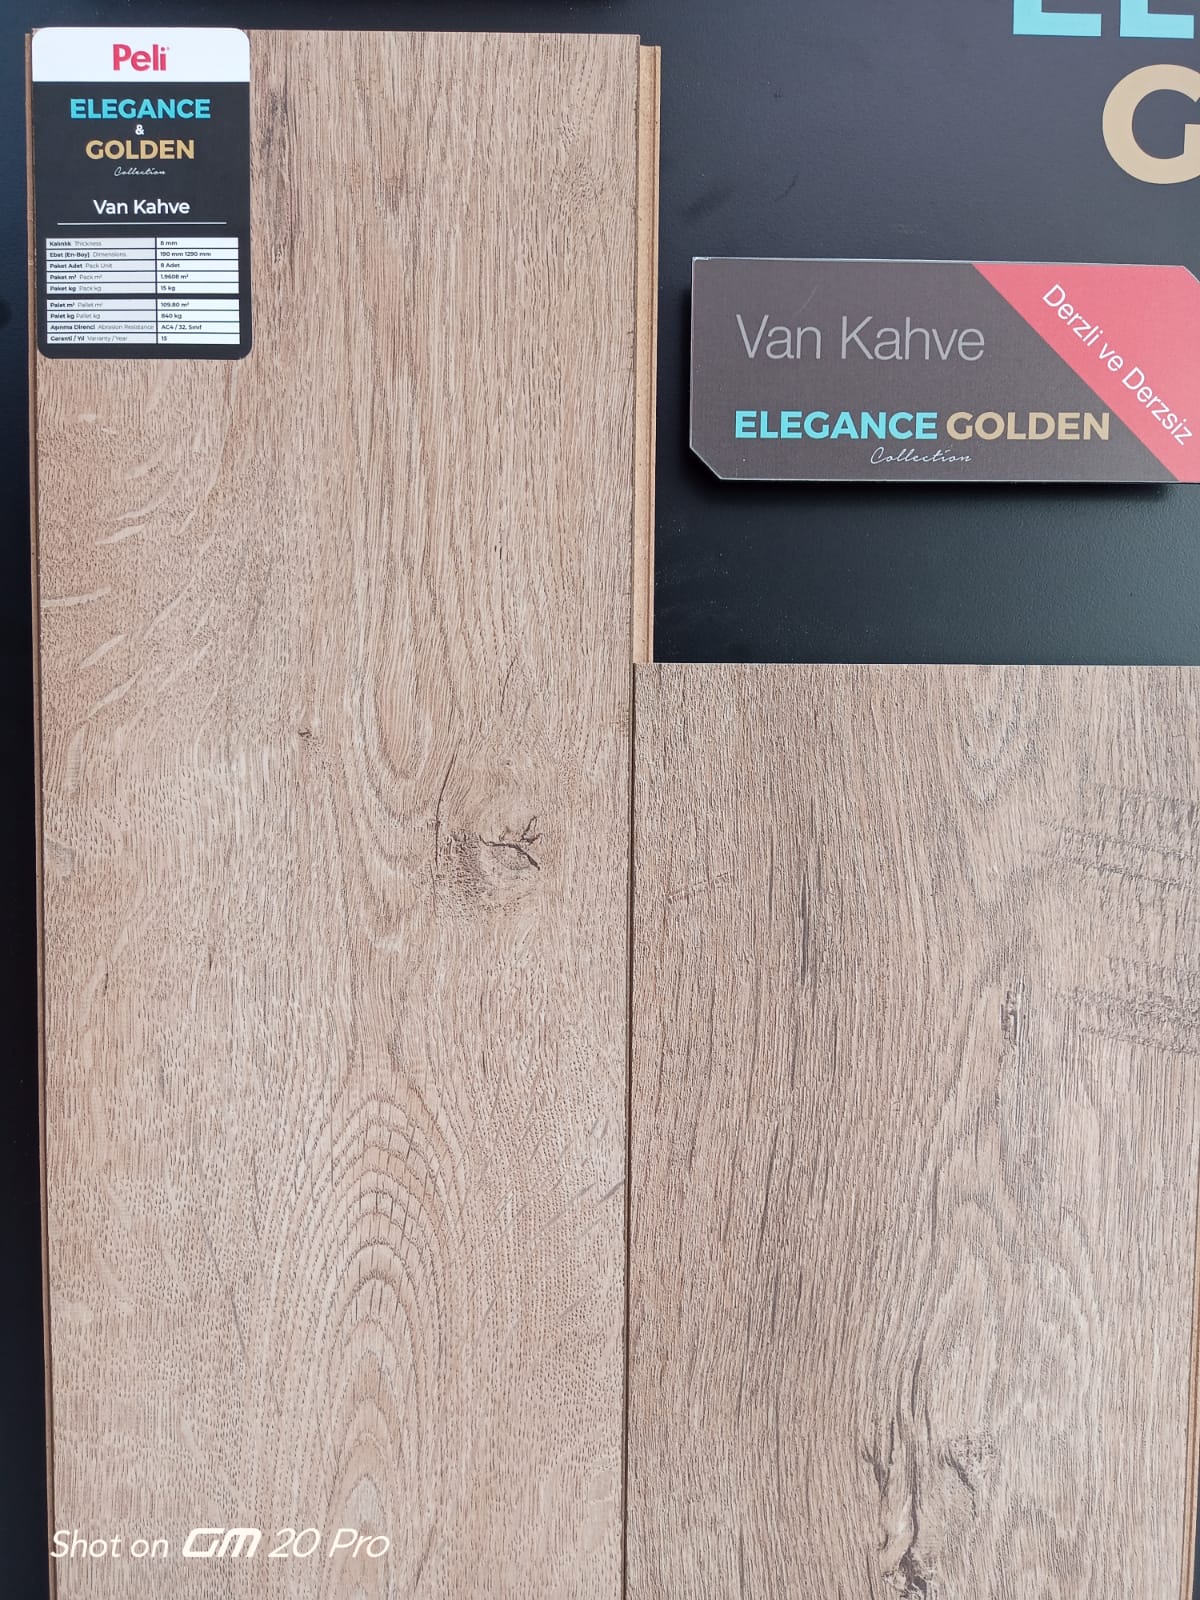 Elegance Golden & Van Kahve